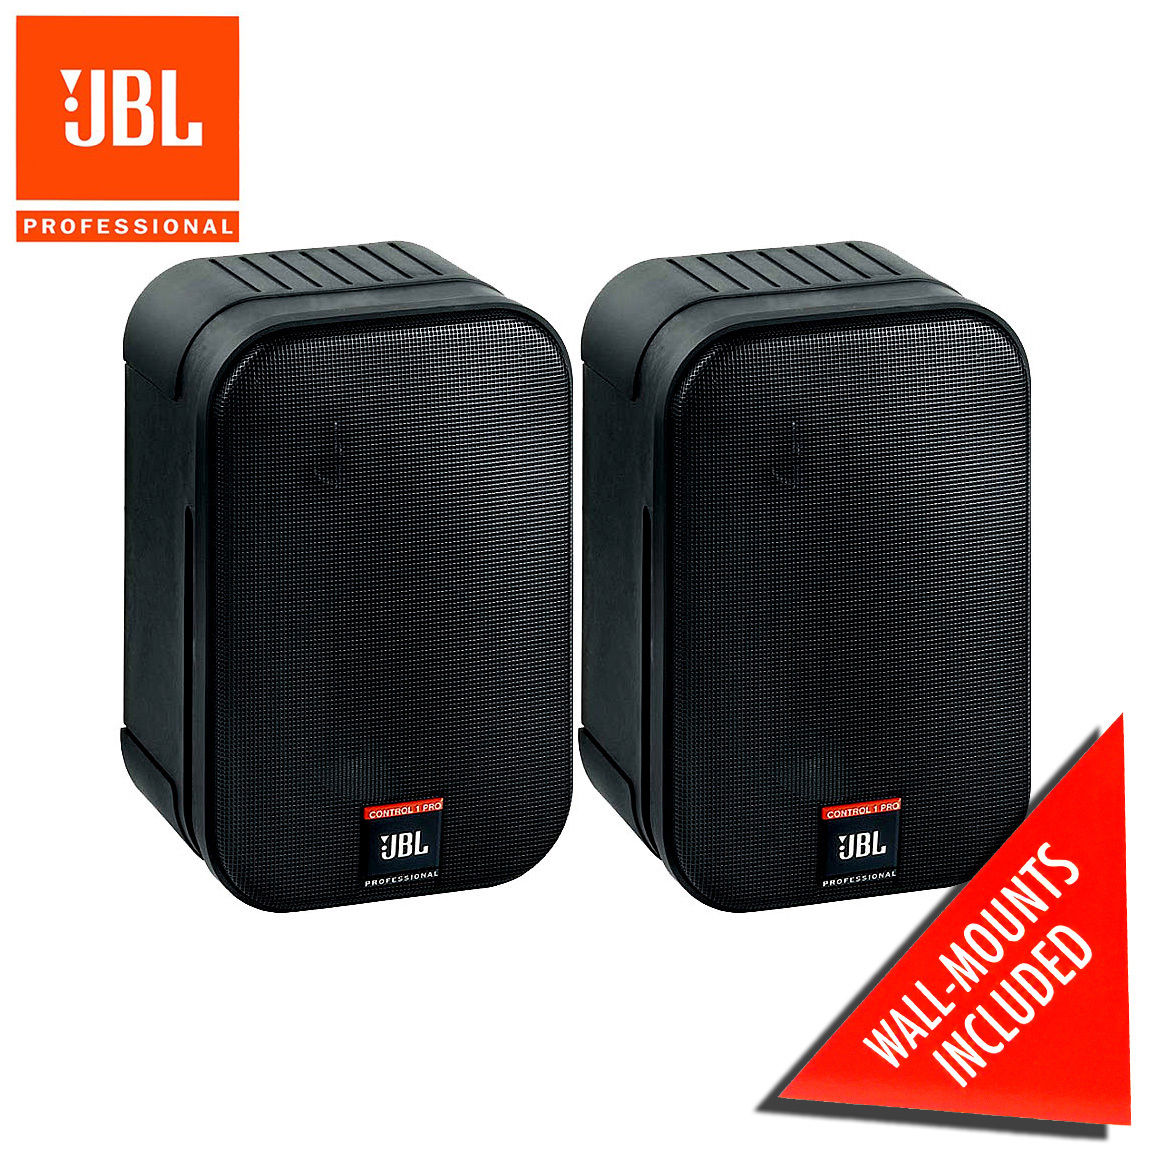 Pro Performance 050 1 JBL – Electronics Hot Speakers Beat Mini High Studio Pair Control 150 W